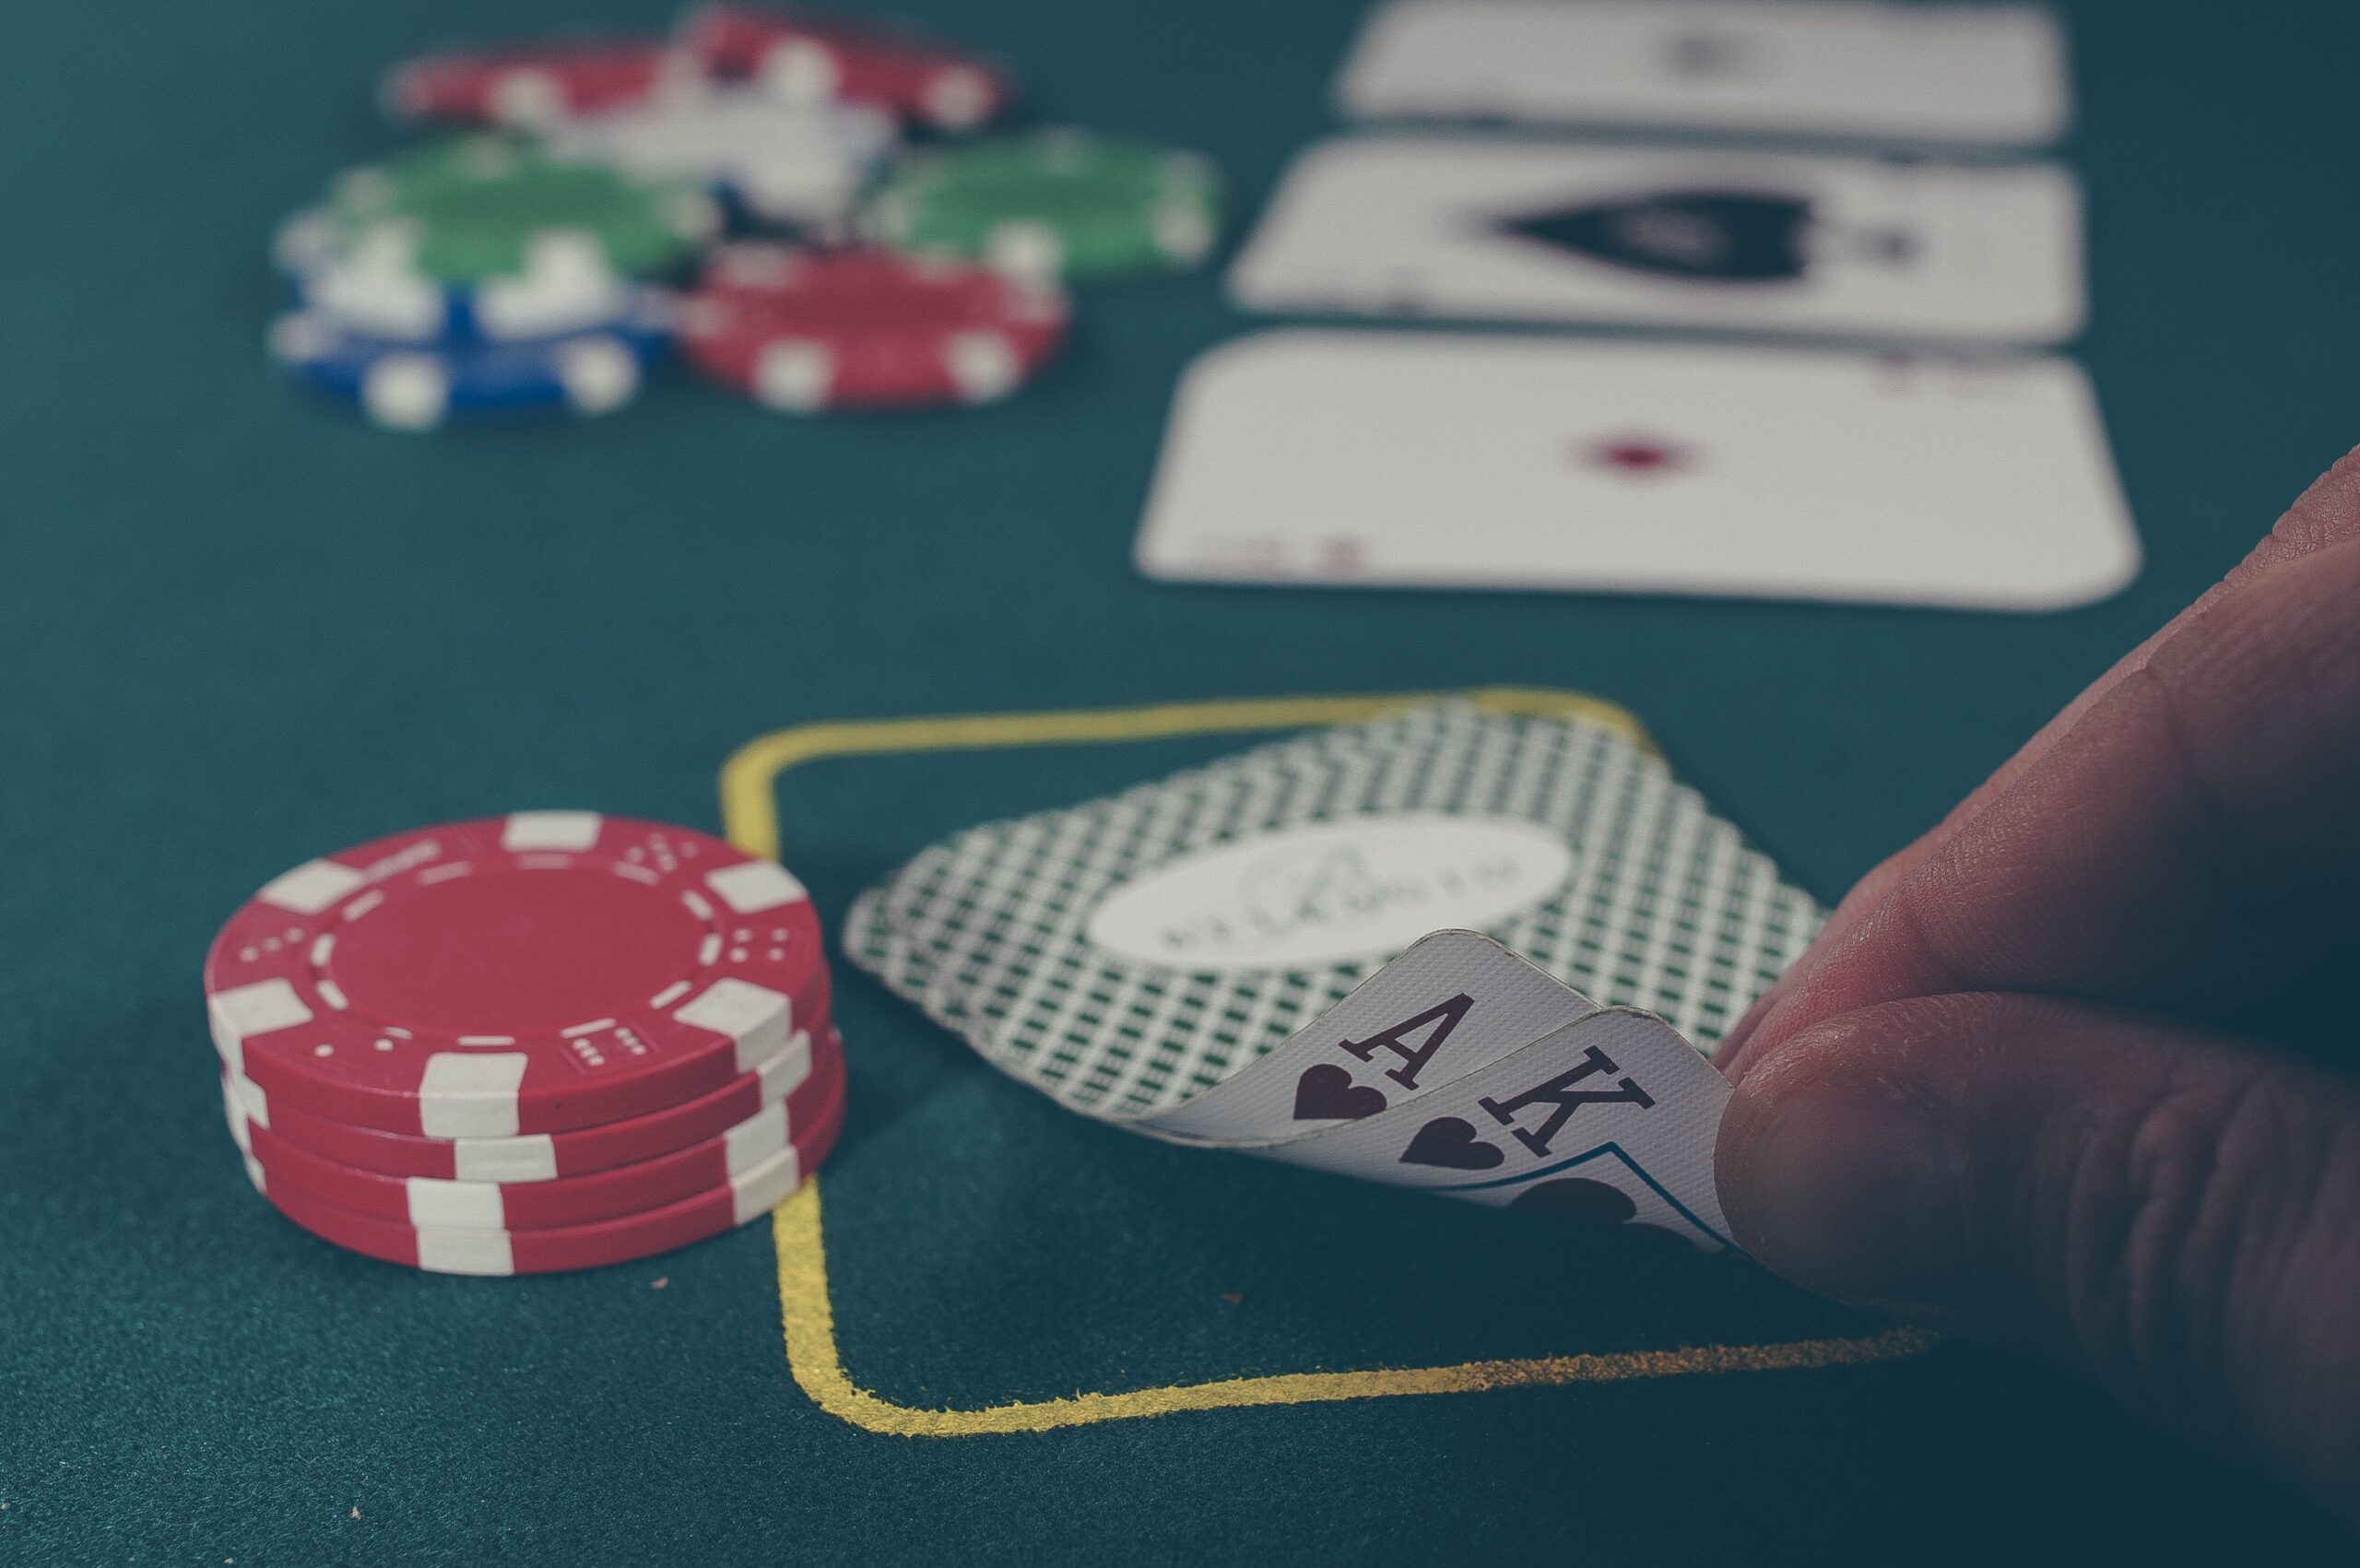 Nebraska Games of Skill Bill Would Legalize Poker, Sports Betting